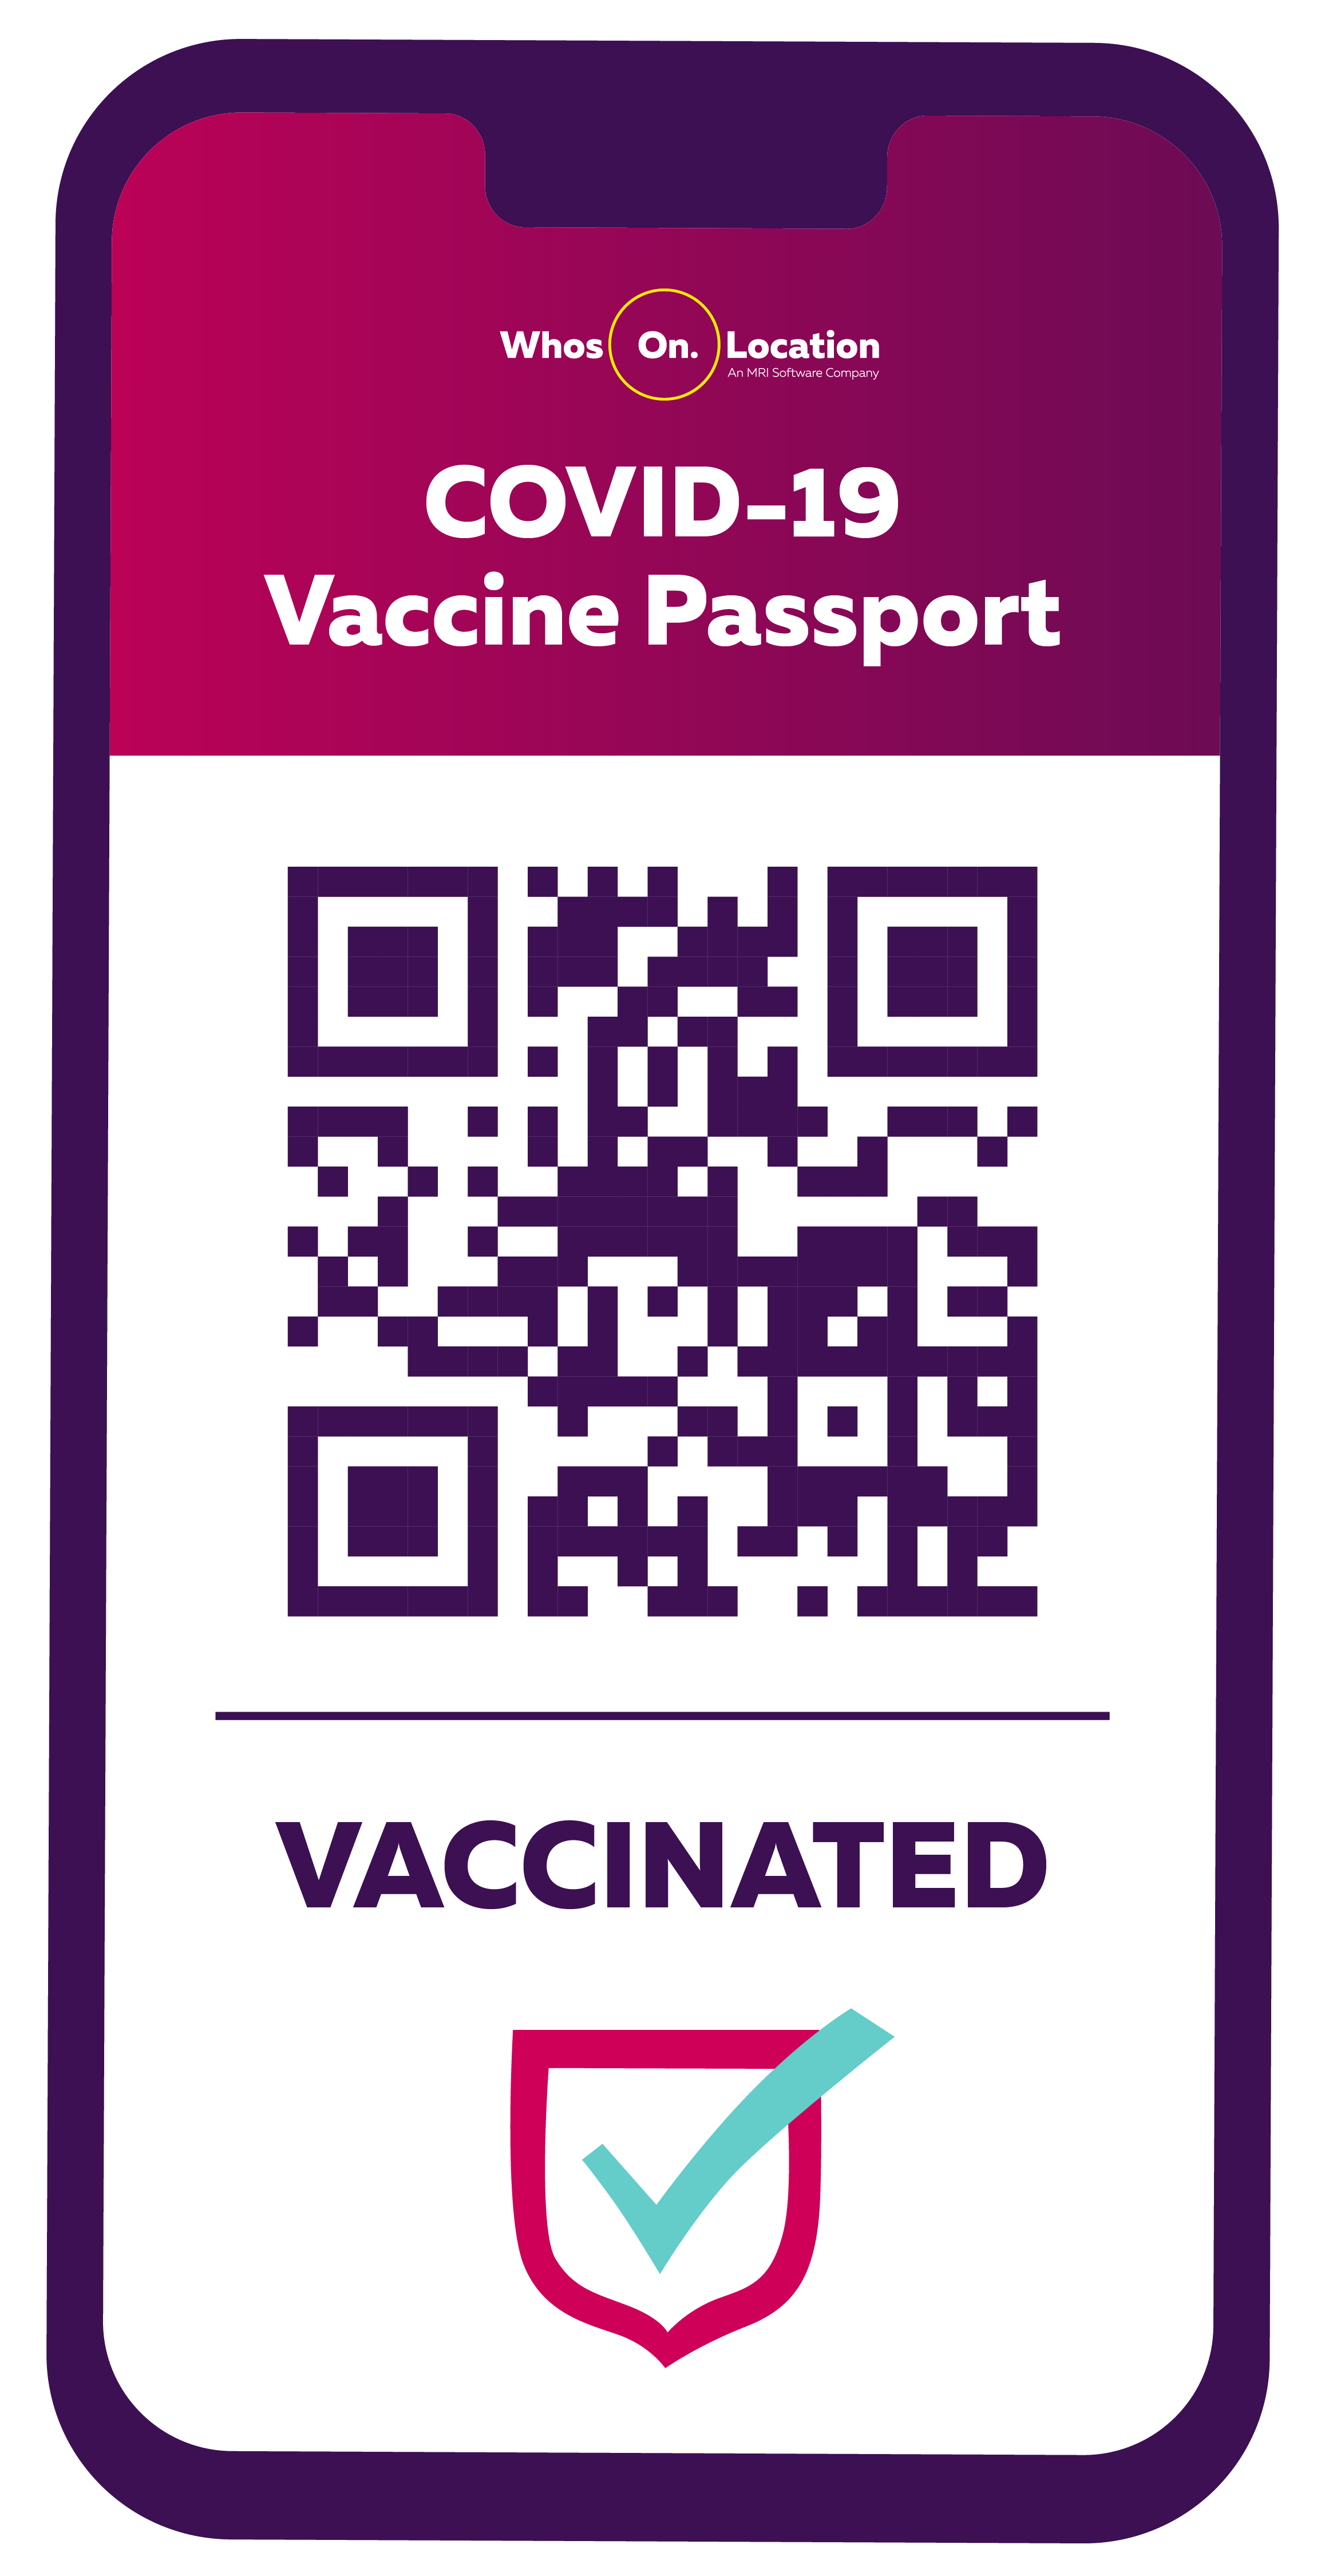 Sample vaccination passort